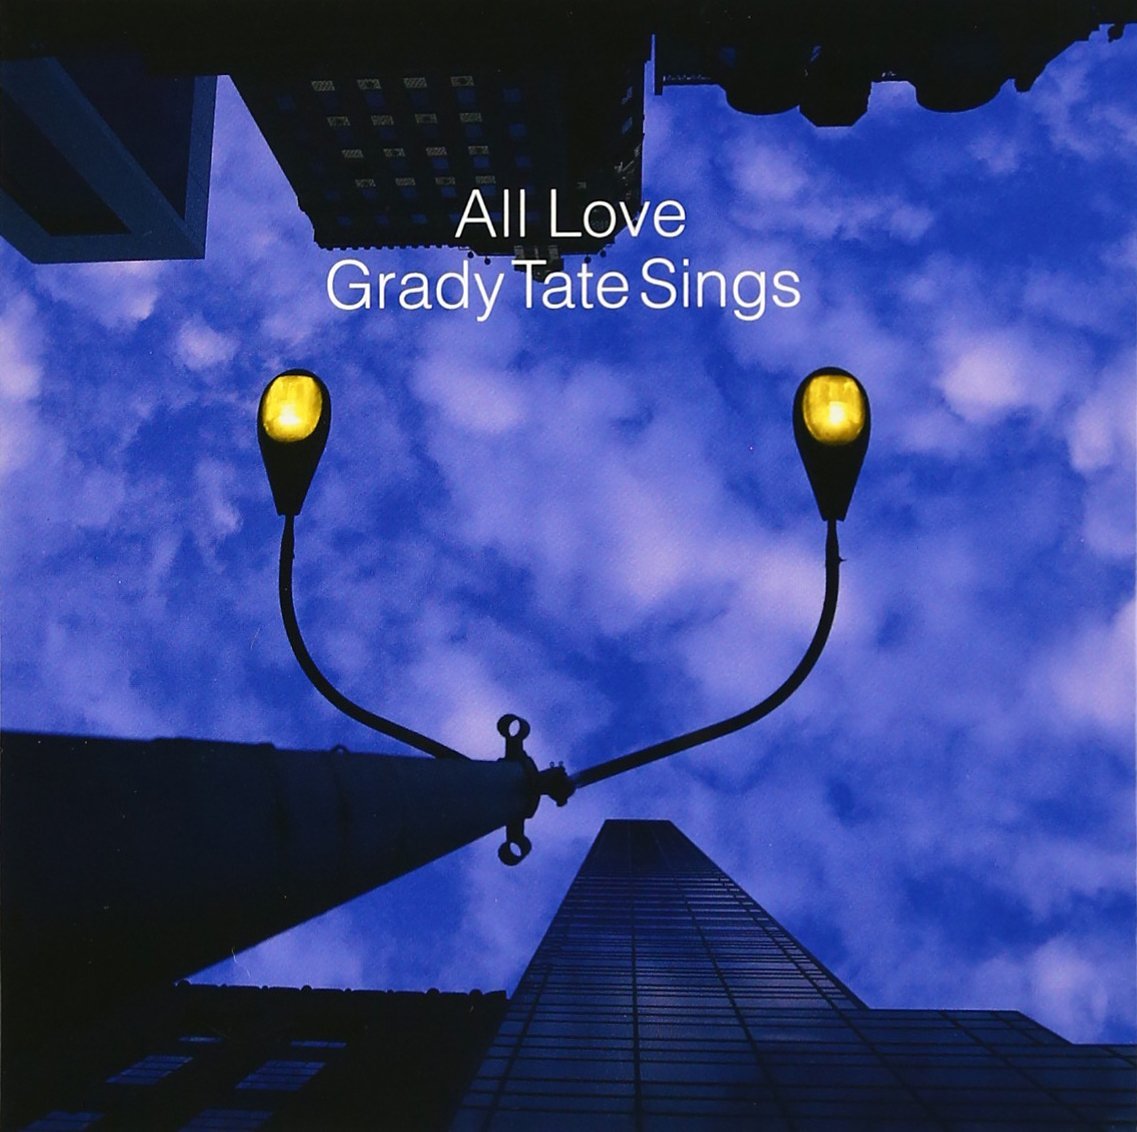 Grady Tate - All Love: Grady Tate Sings (2002) [Japan] SACD ISO + FLAC 24bit/96kHz